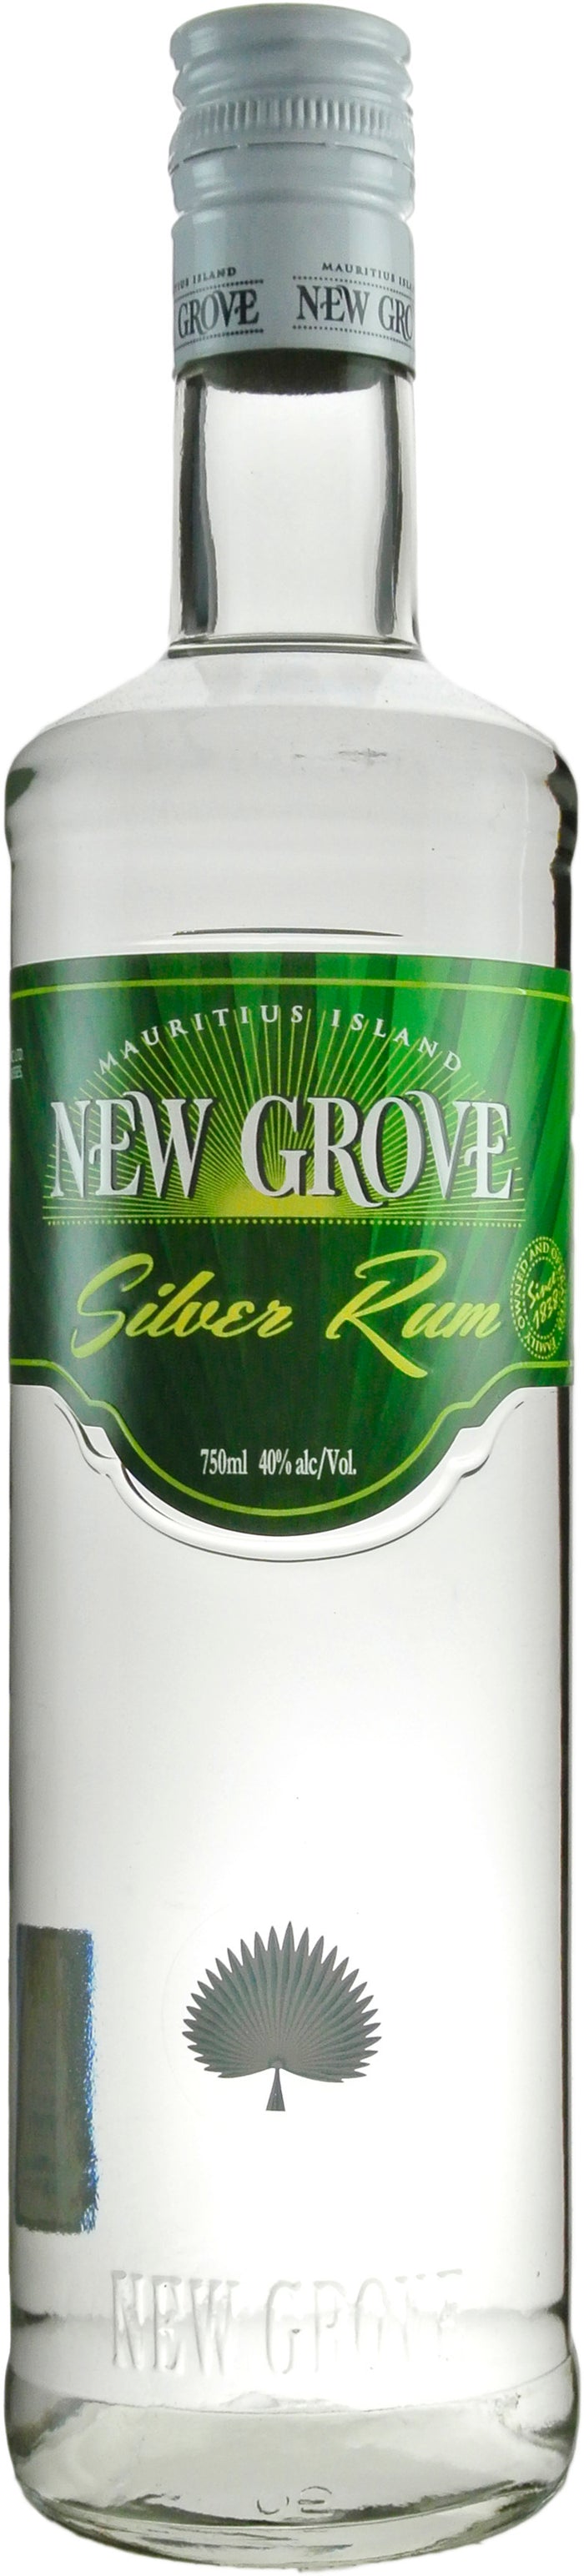 New Grove Silver Rum